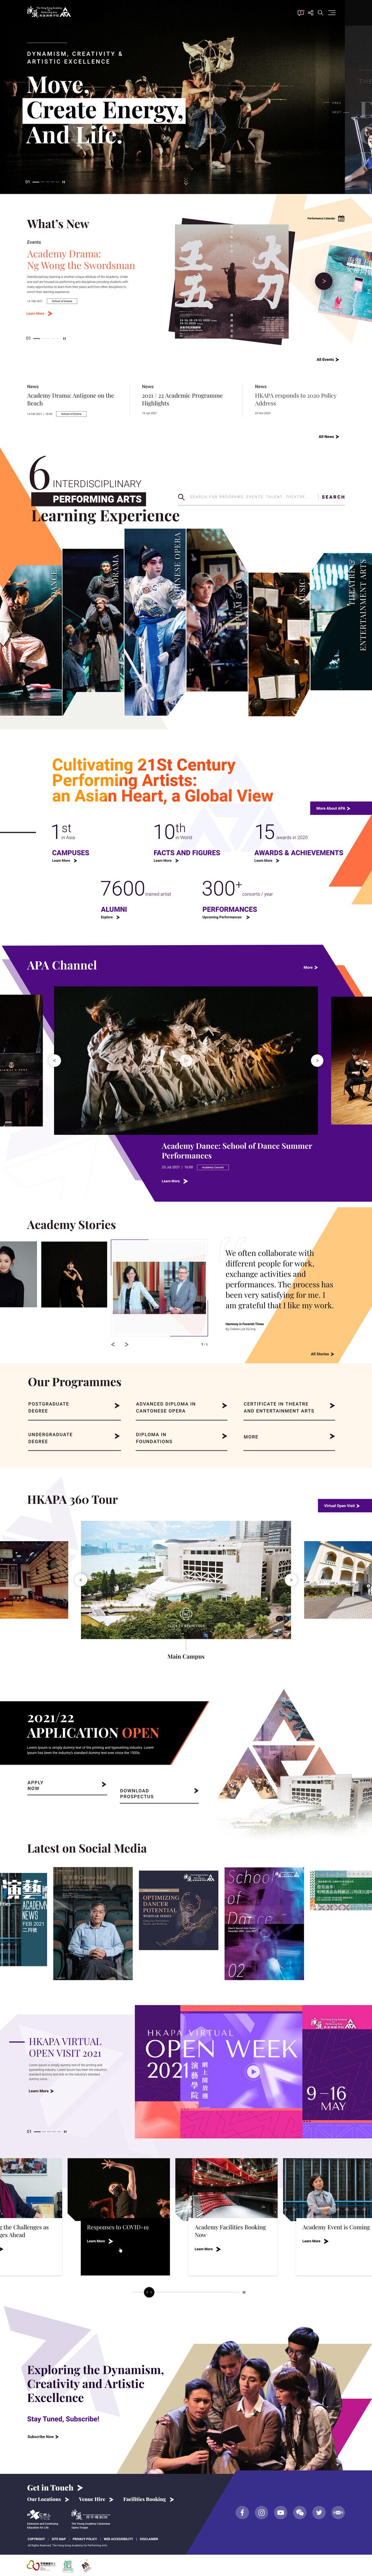 HKAPA - Desktop Homepage